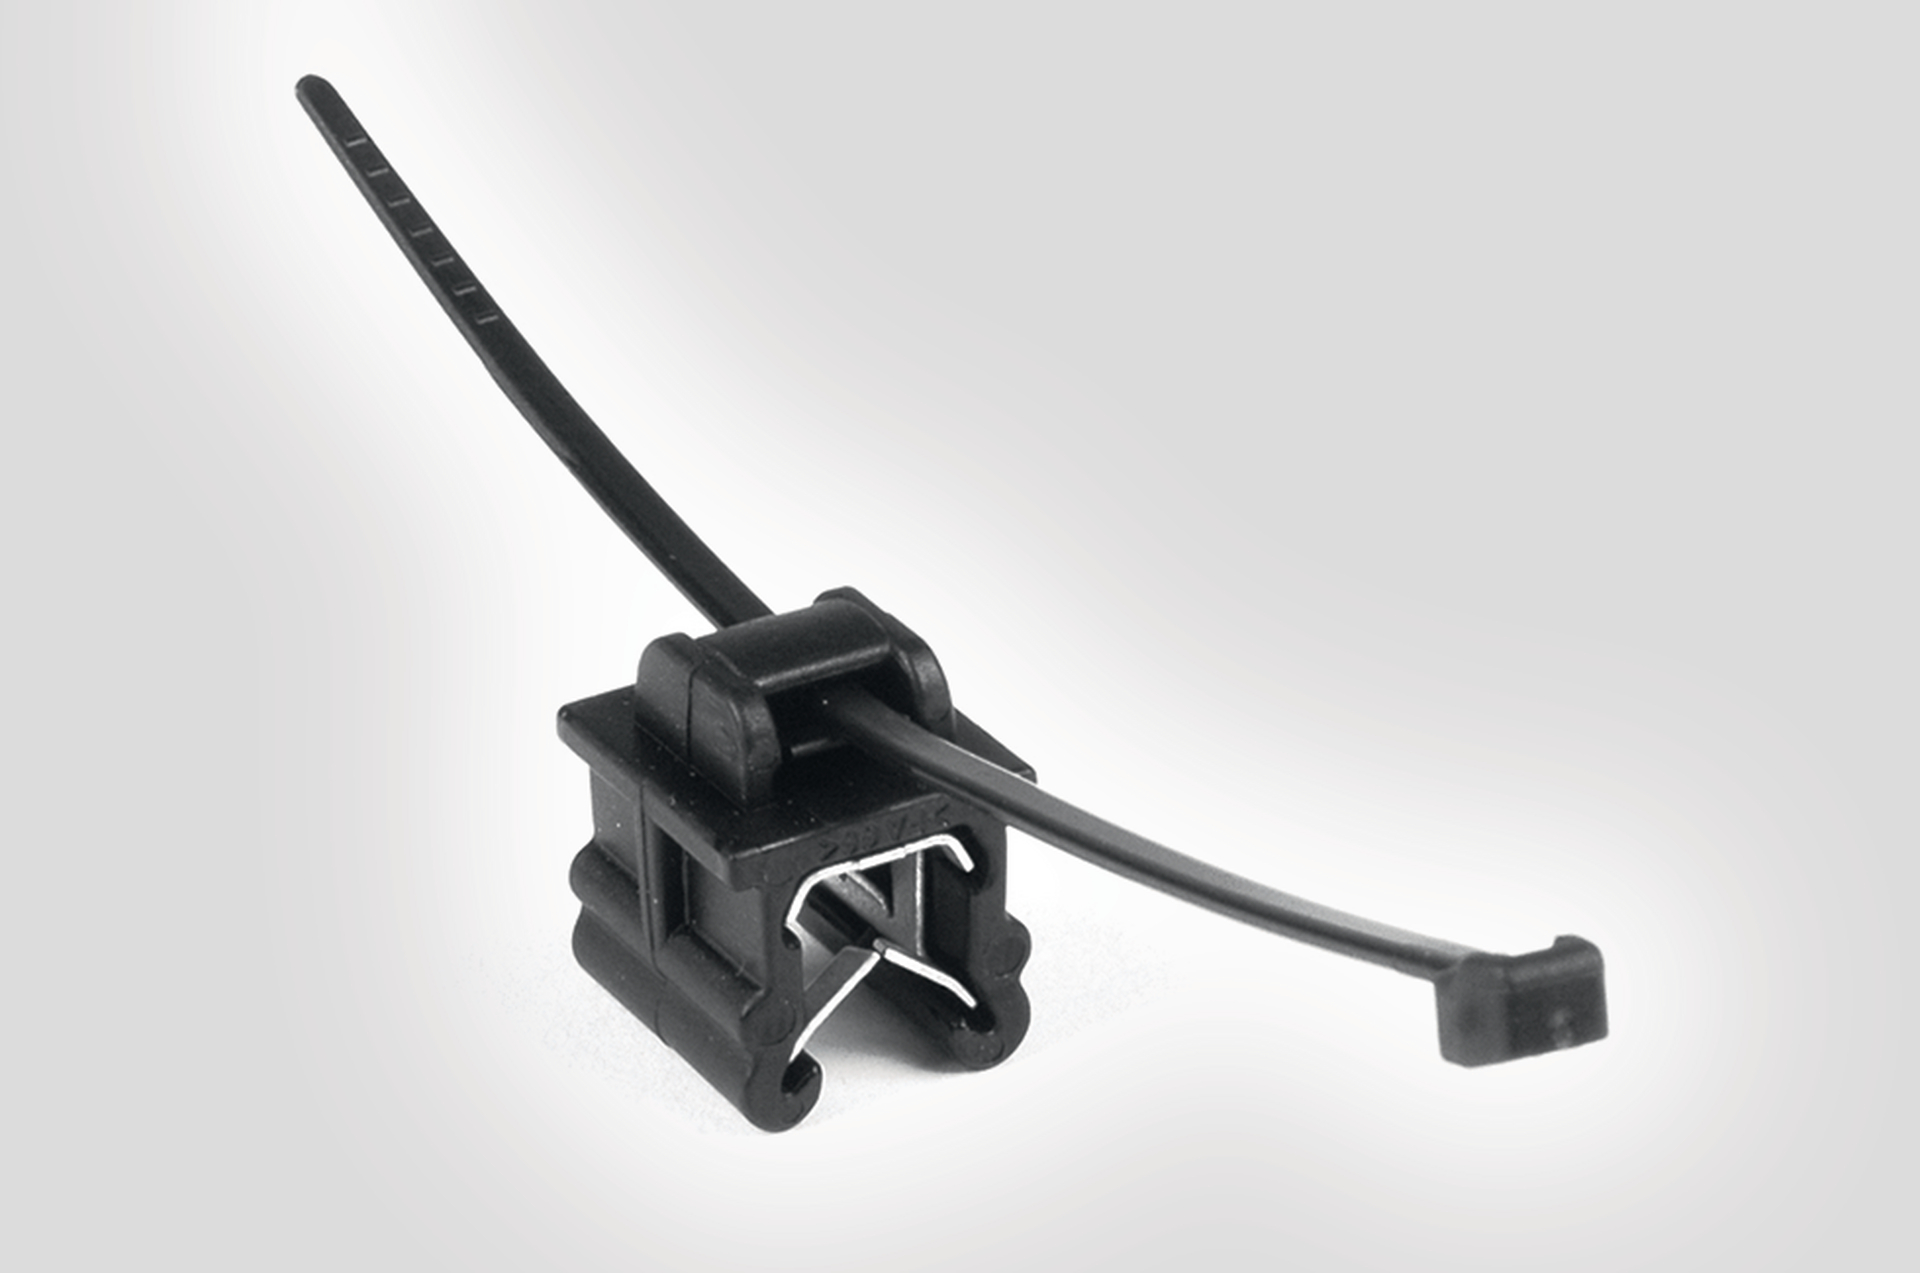 Lot of 200 Hellermann Tyton Black Cable Zip Ties 8" T50MRX Screw Mount